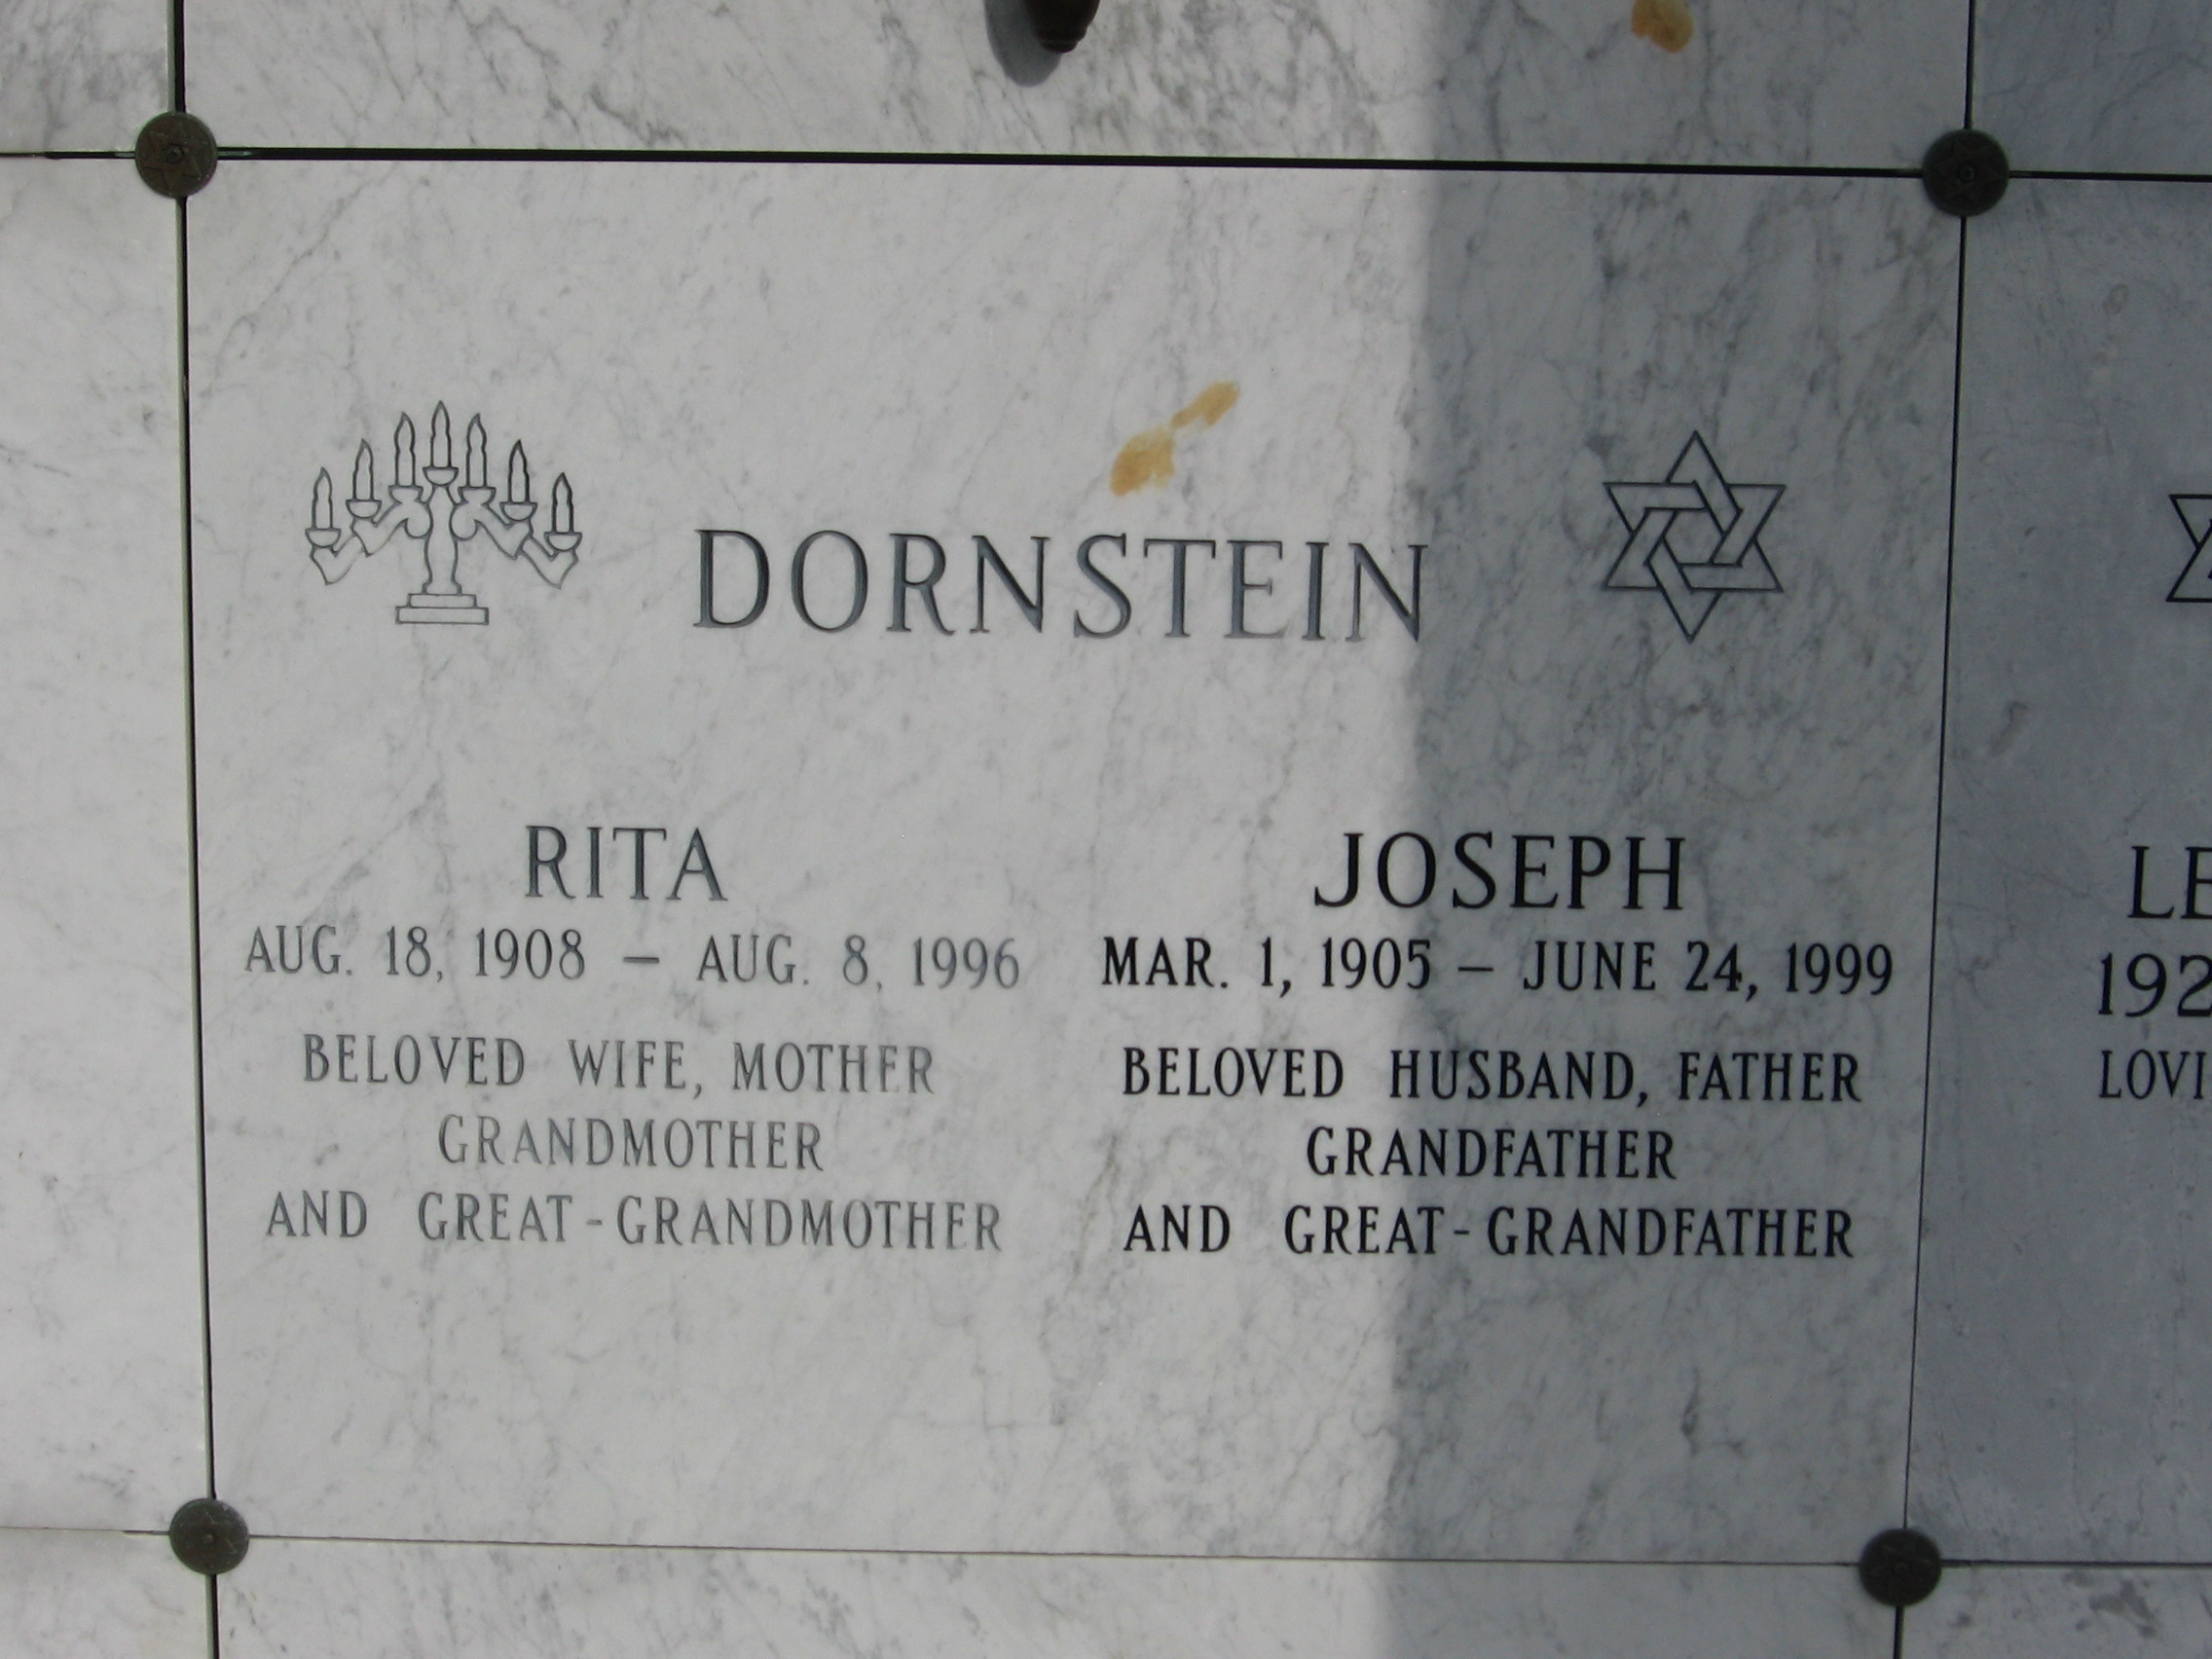 Rita Dornstein